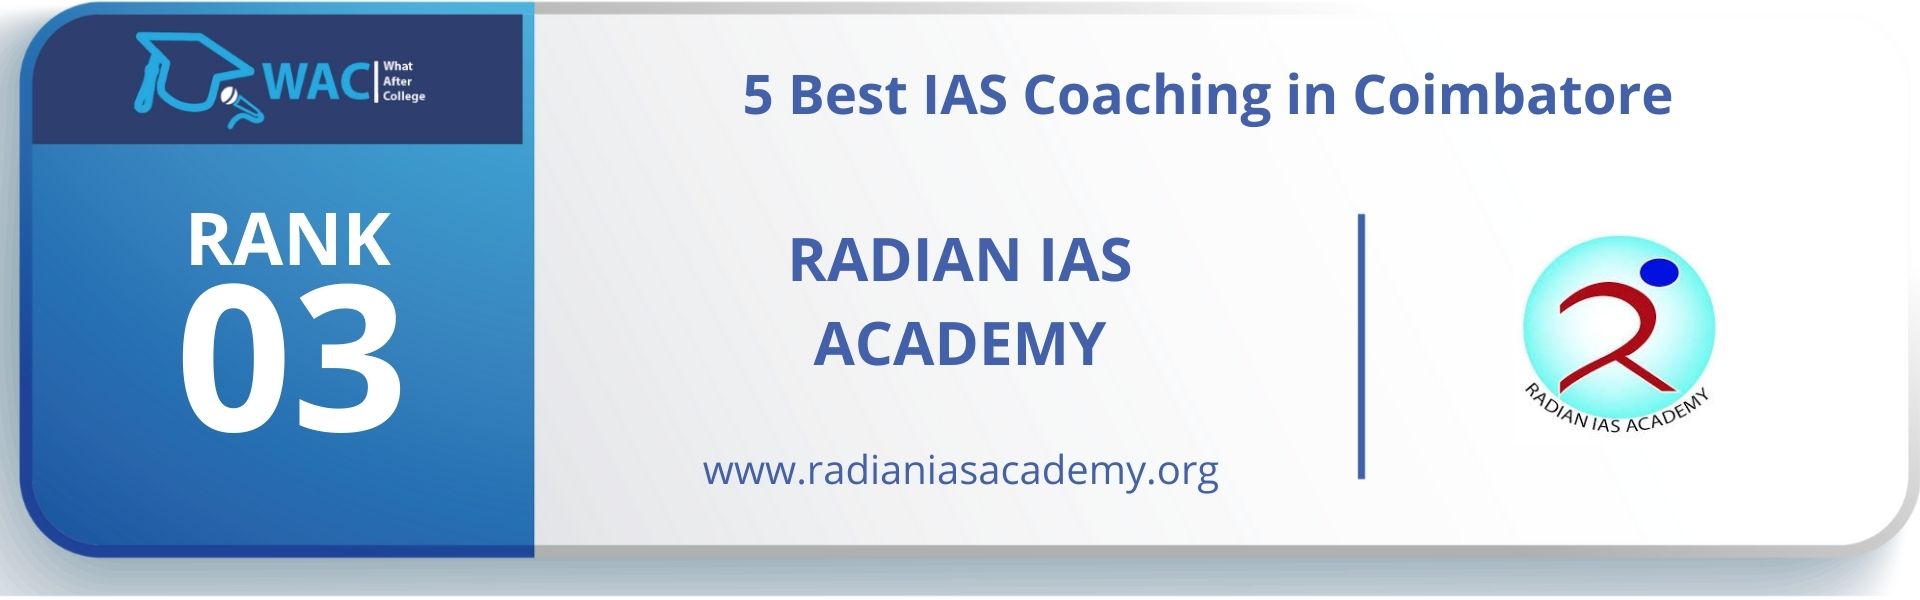 5 Best IAS Coaching in Coimbatore Rank 3: Radian IAS Academy in Coimbatore